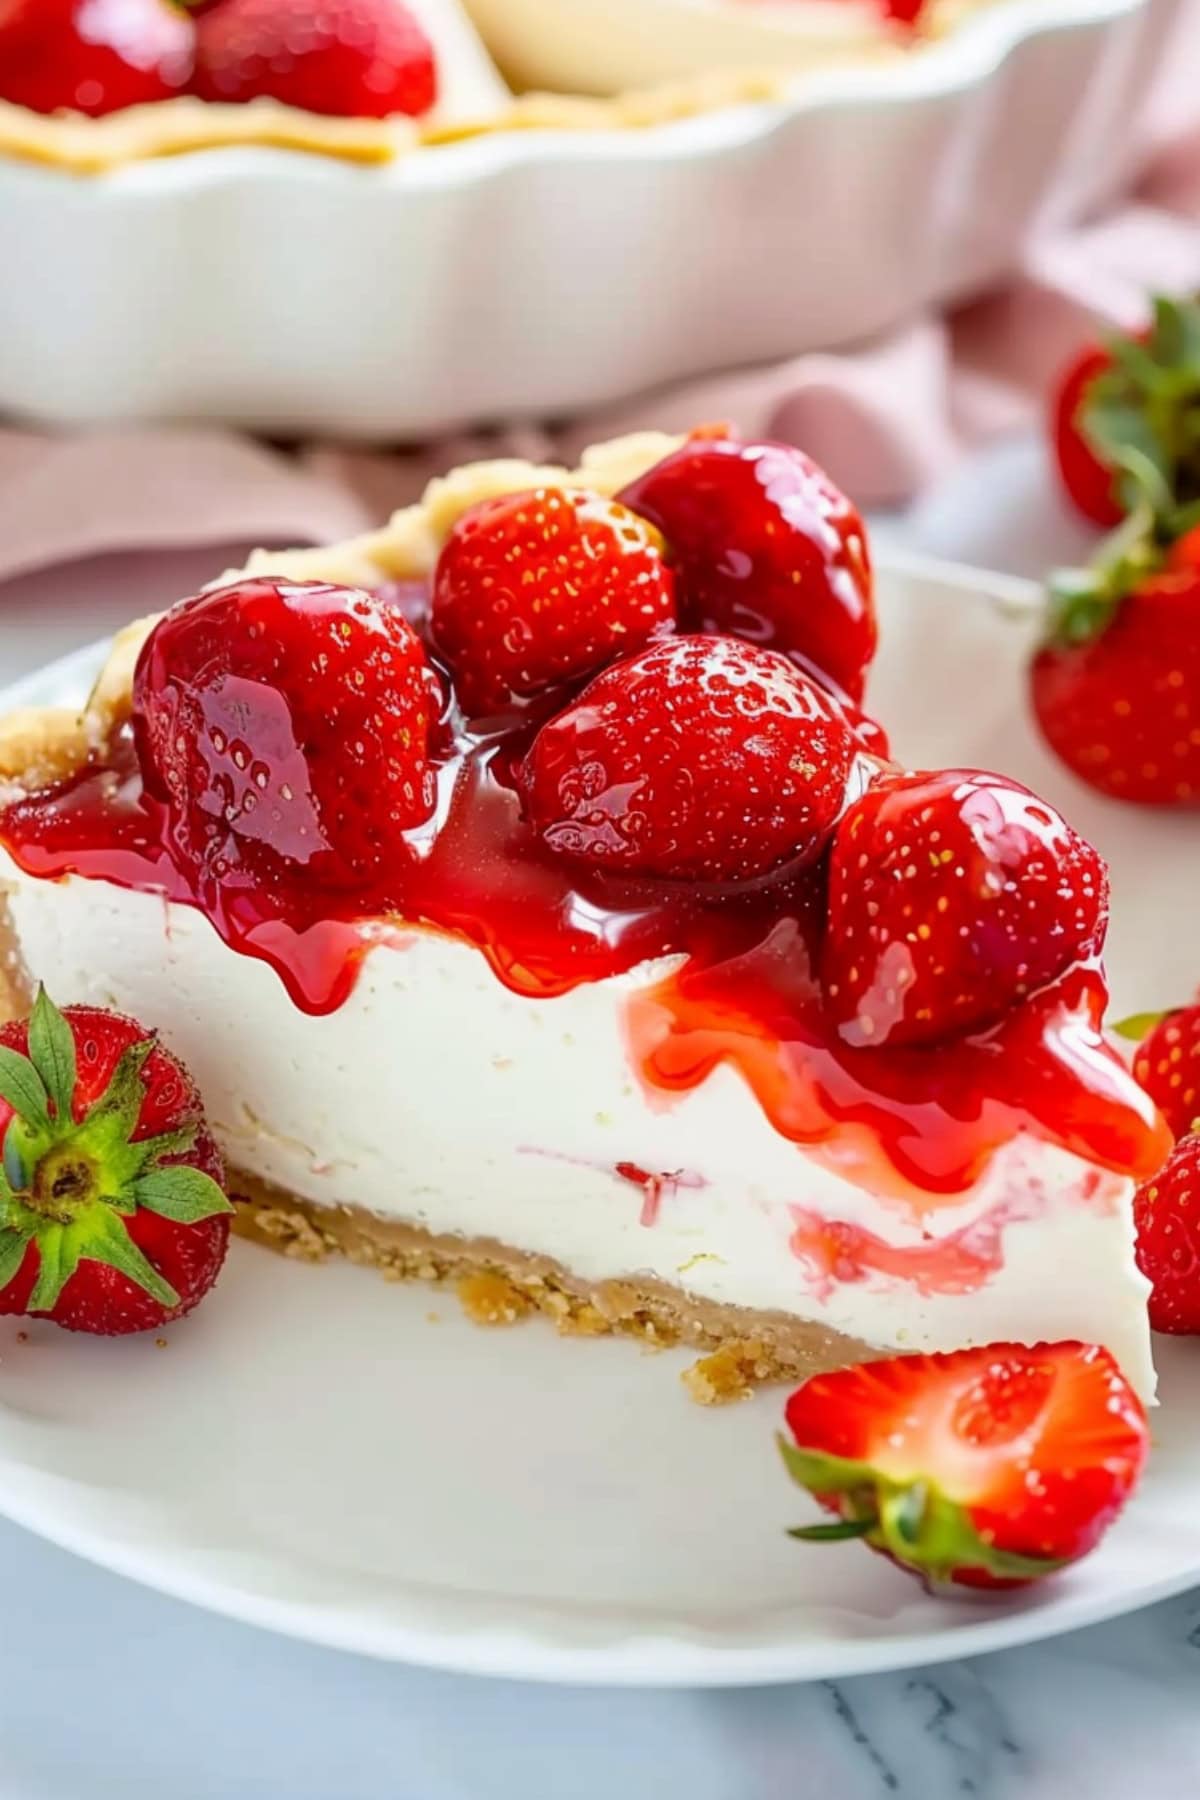 Slice of strawberry cream pie on a white plate.